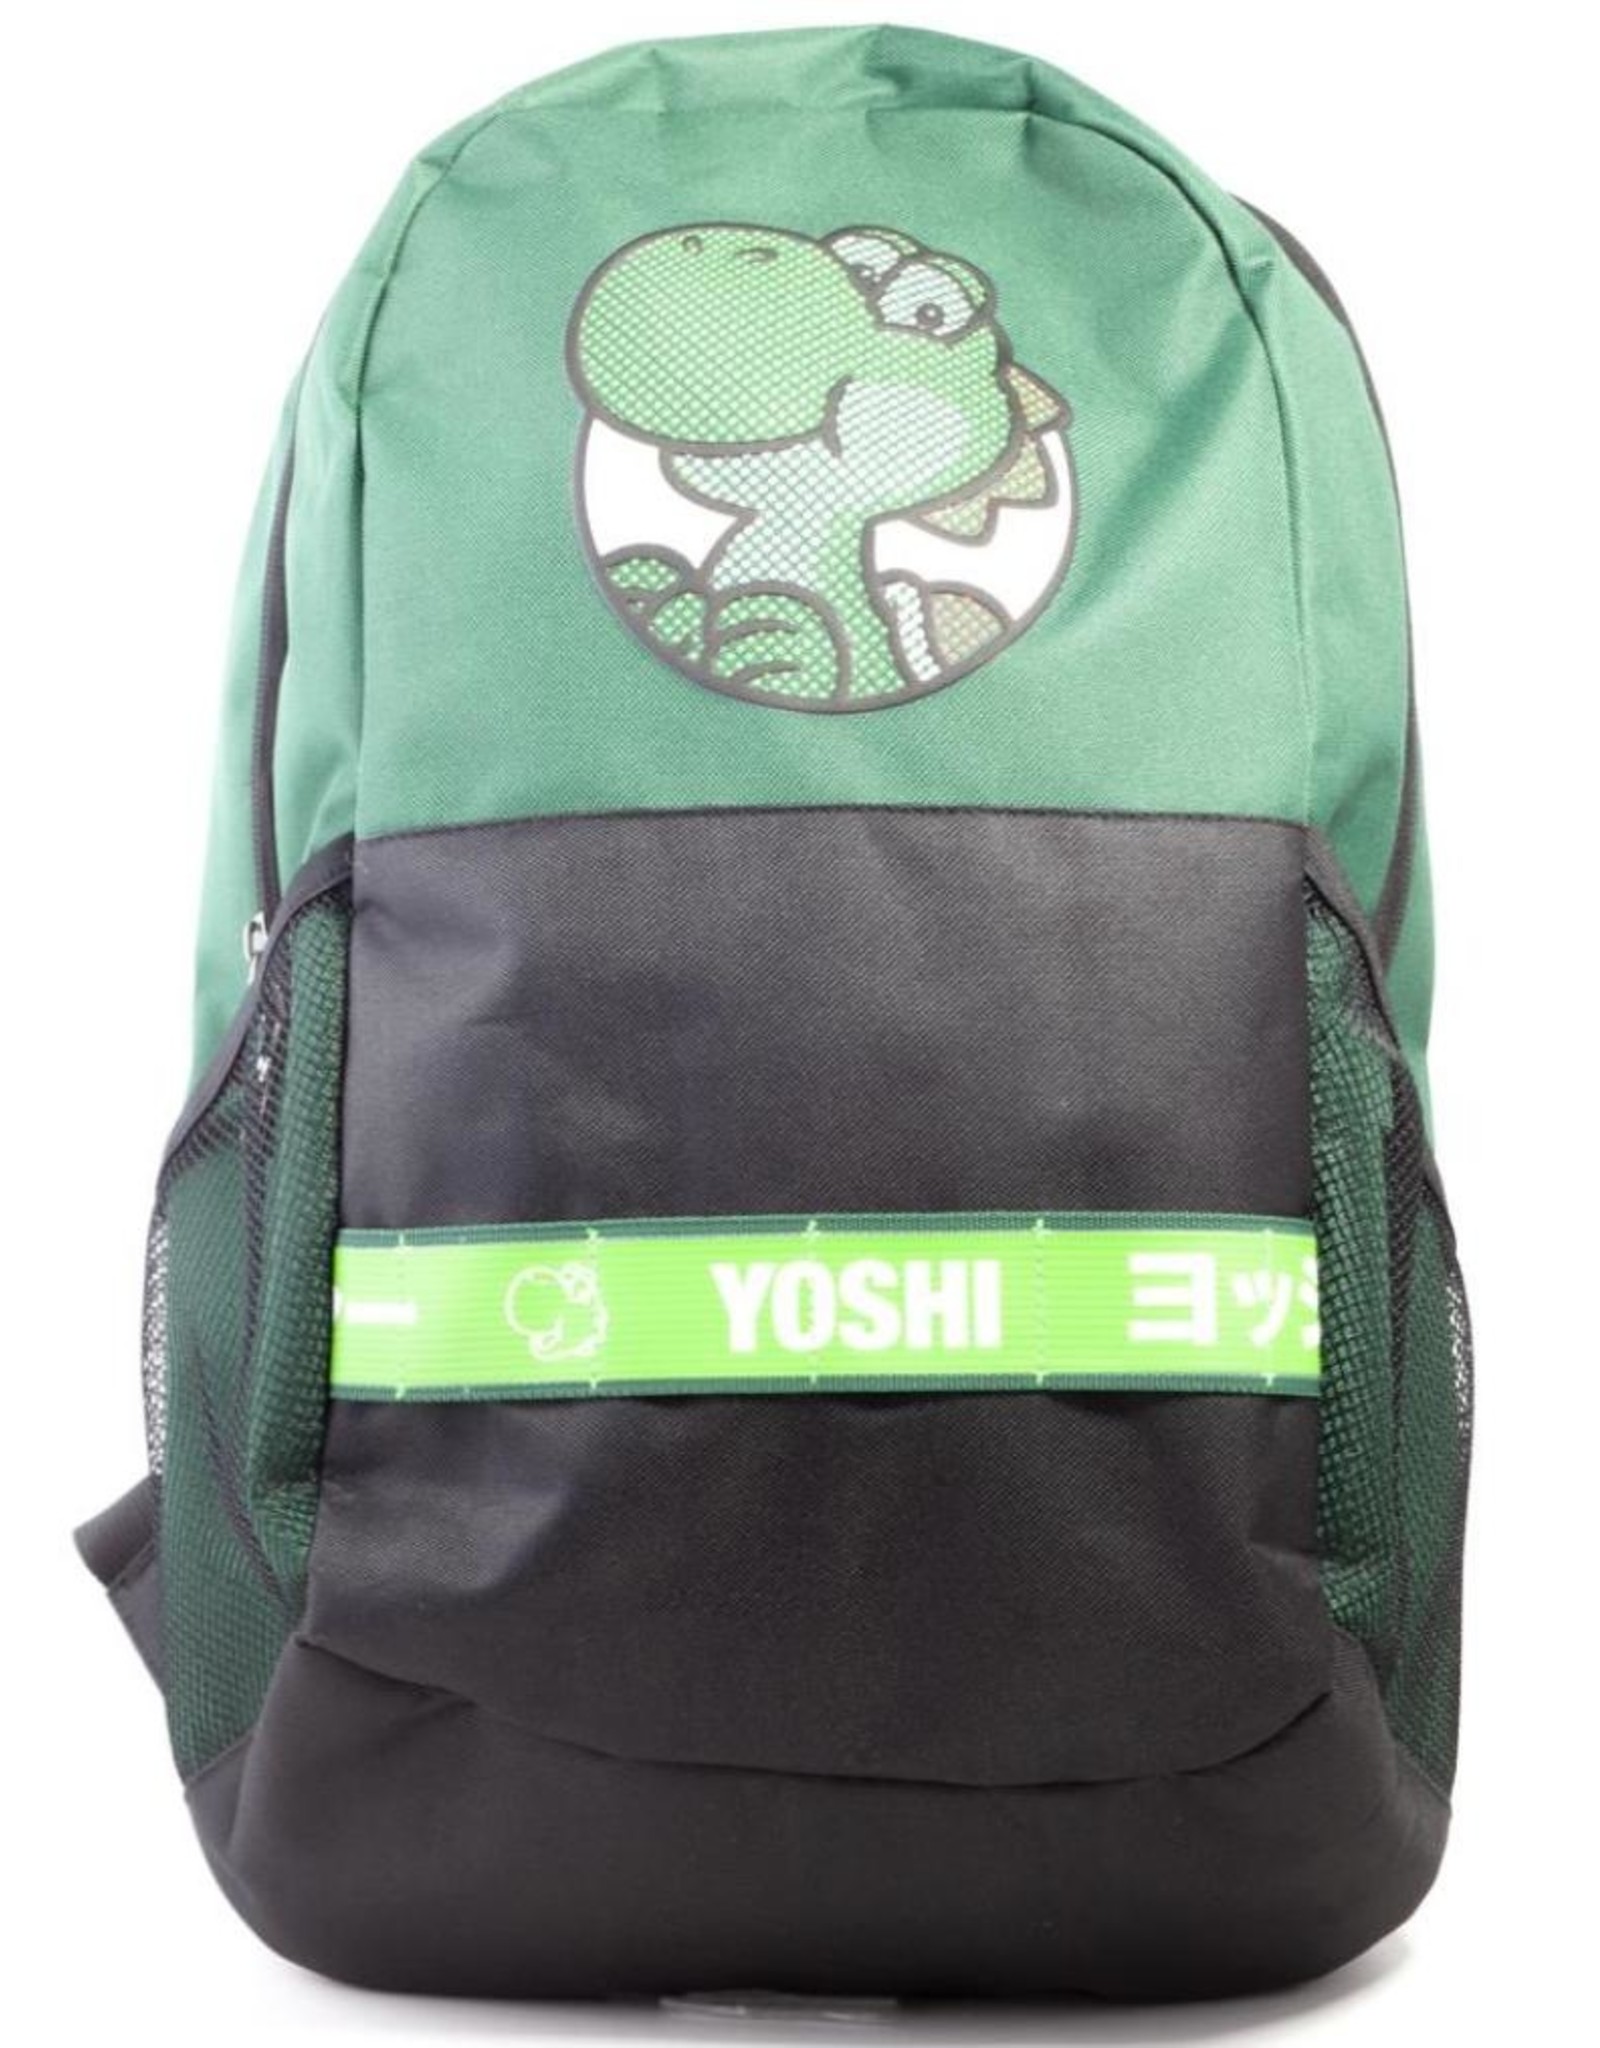 Nintendo Merchandise bags - Nintendo Super Mario Yoshi taped backpack